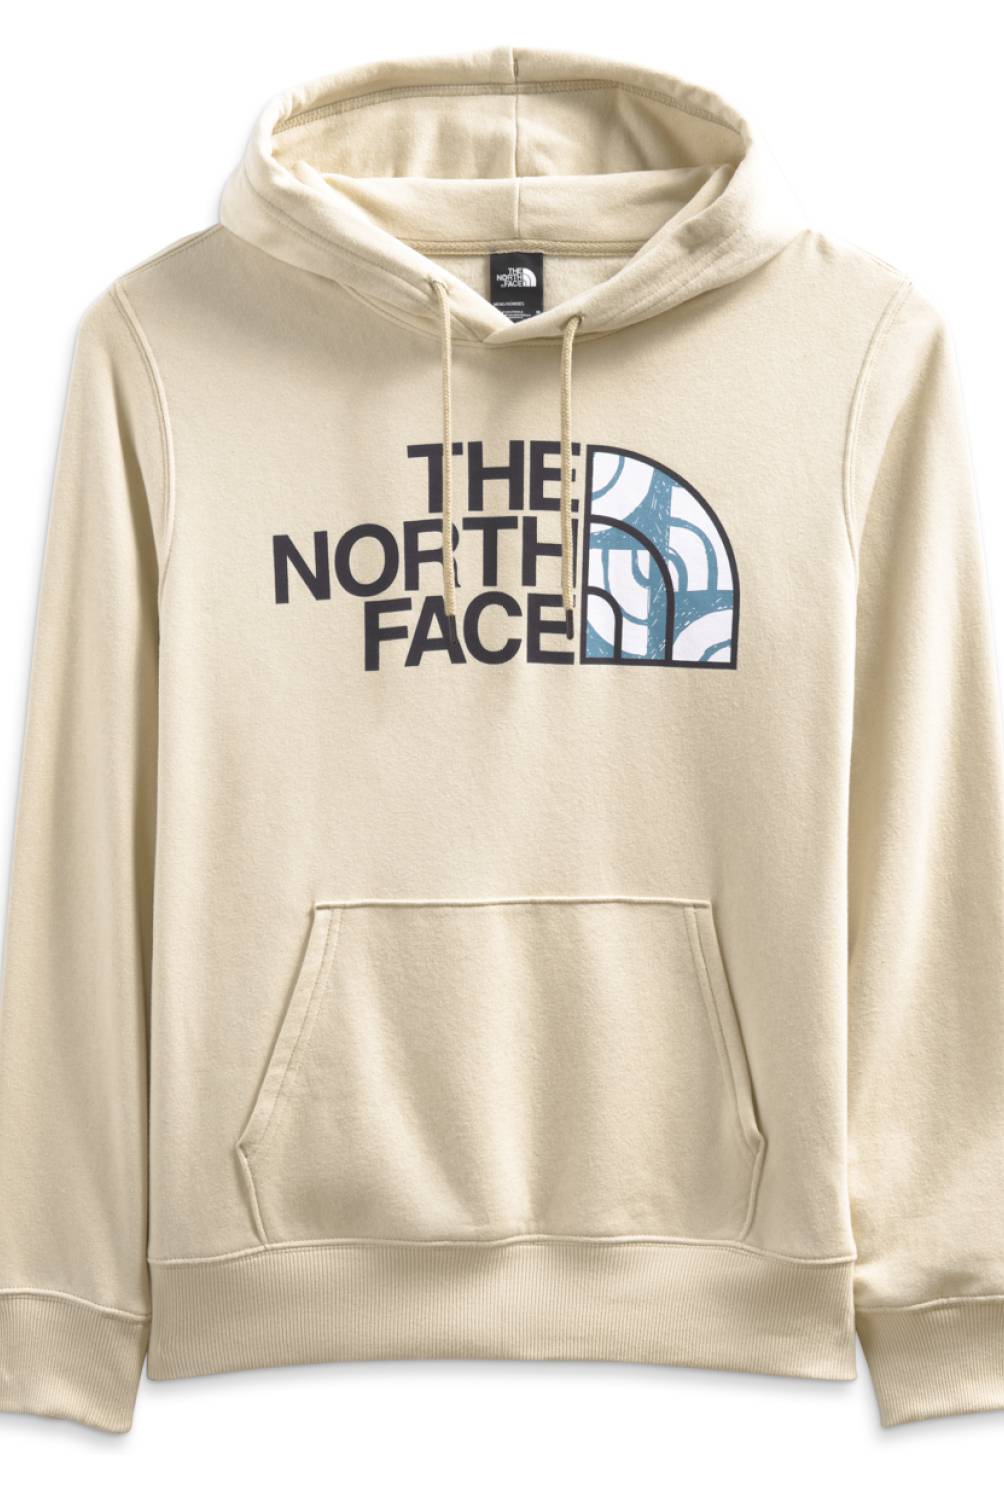 THE NORTH FACE - Polerón Casual Hombre The North Face